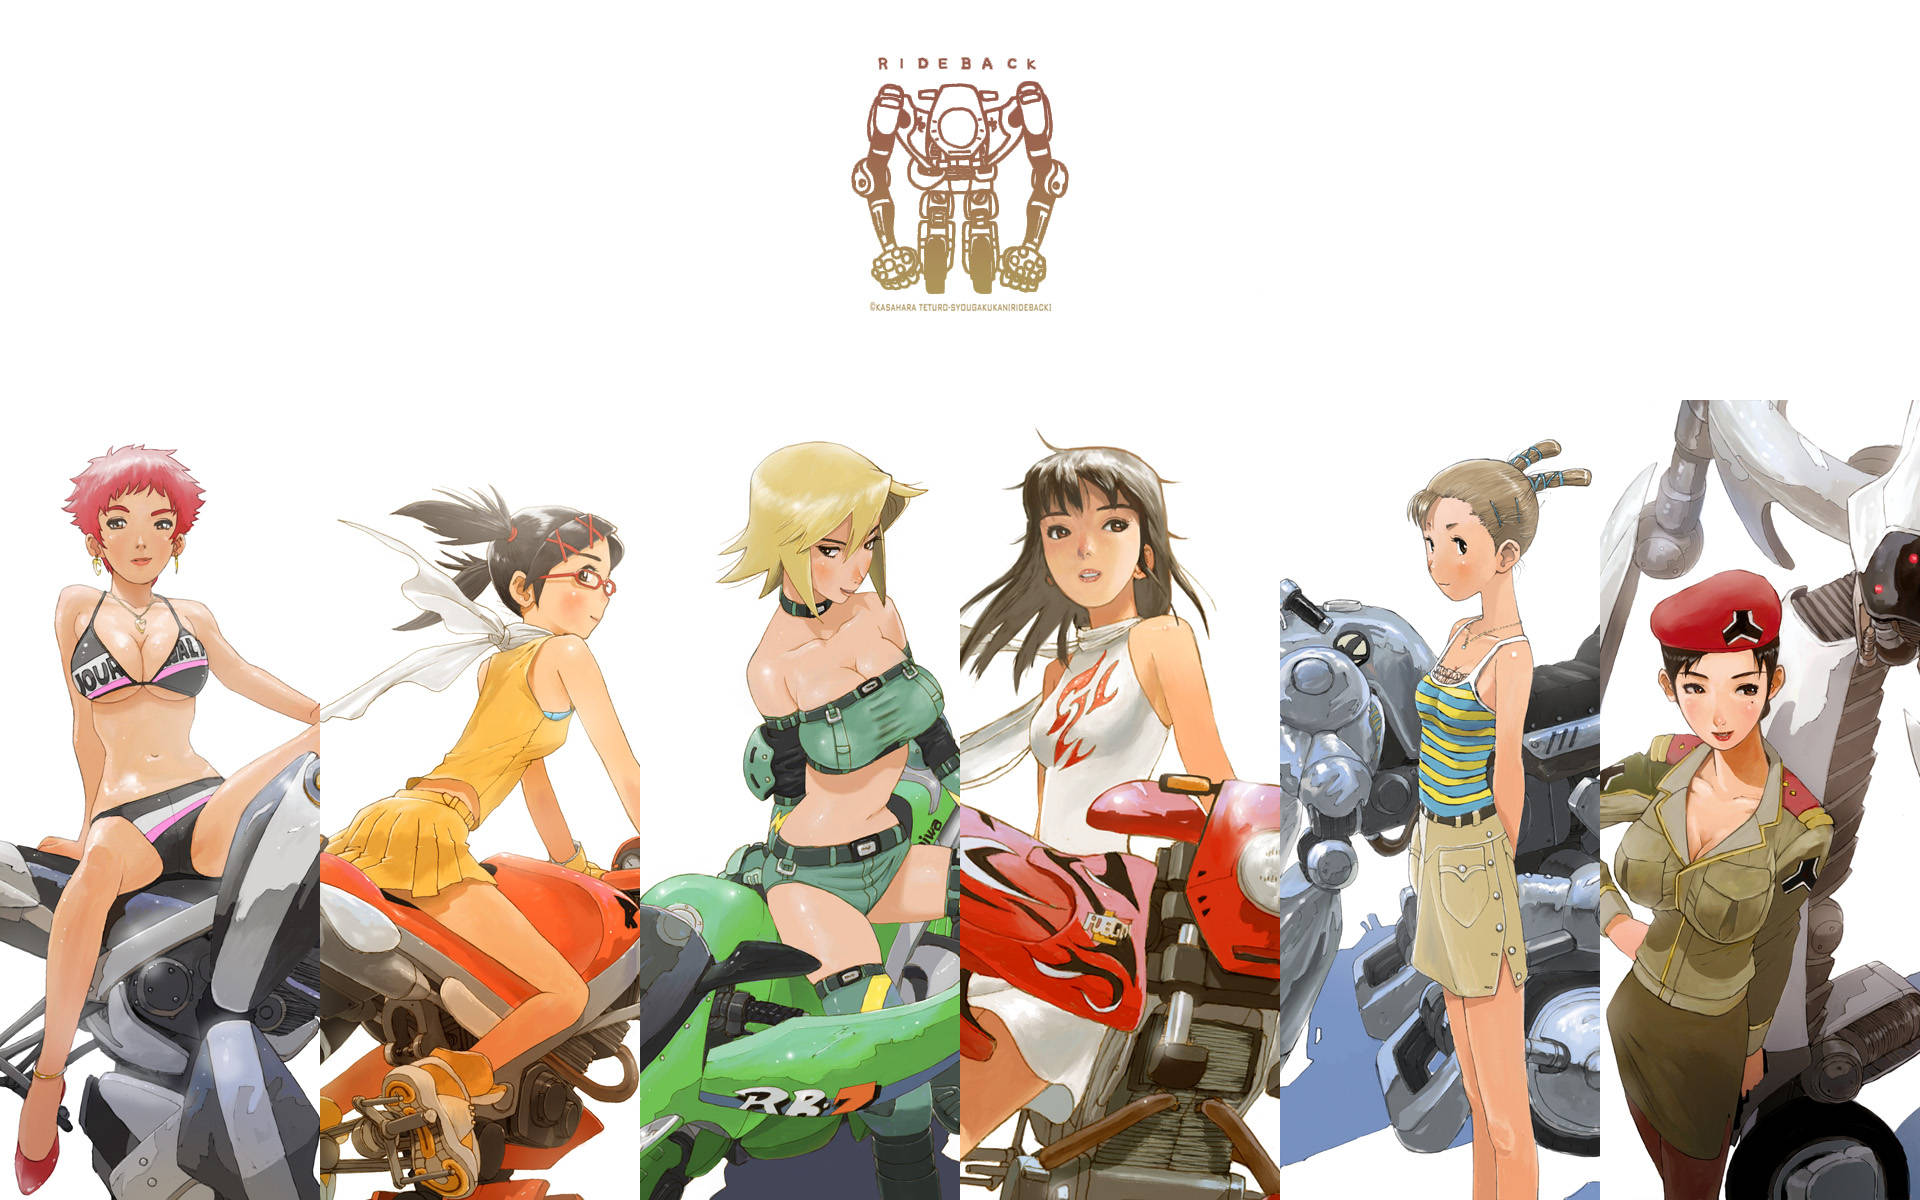 Rideback Anime Poster Background